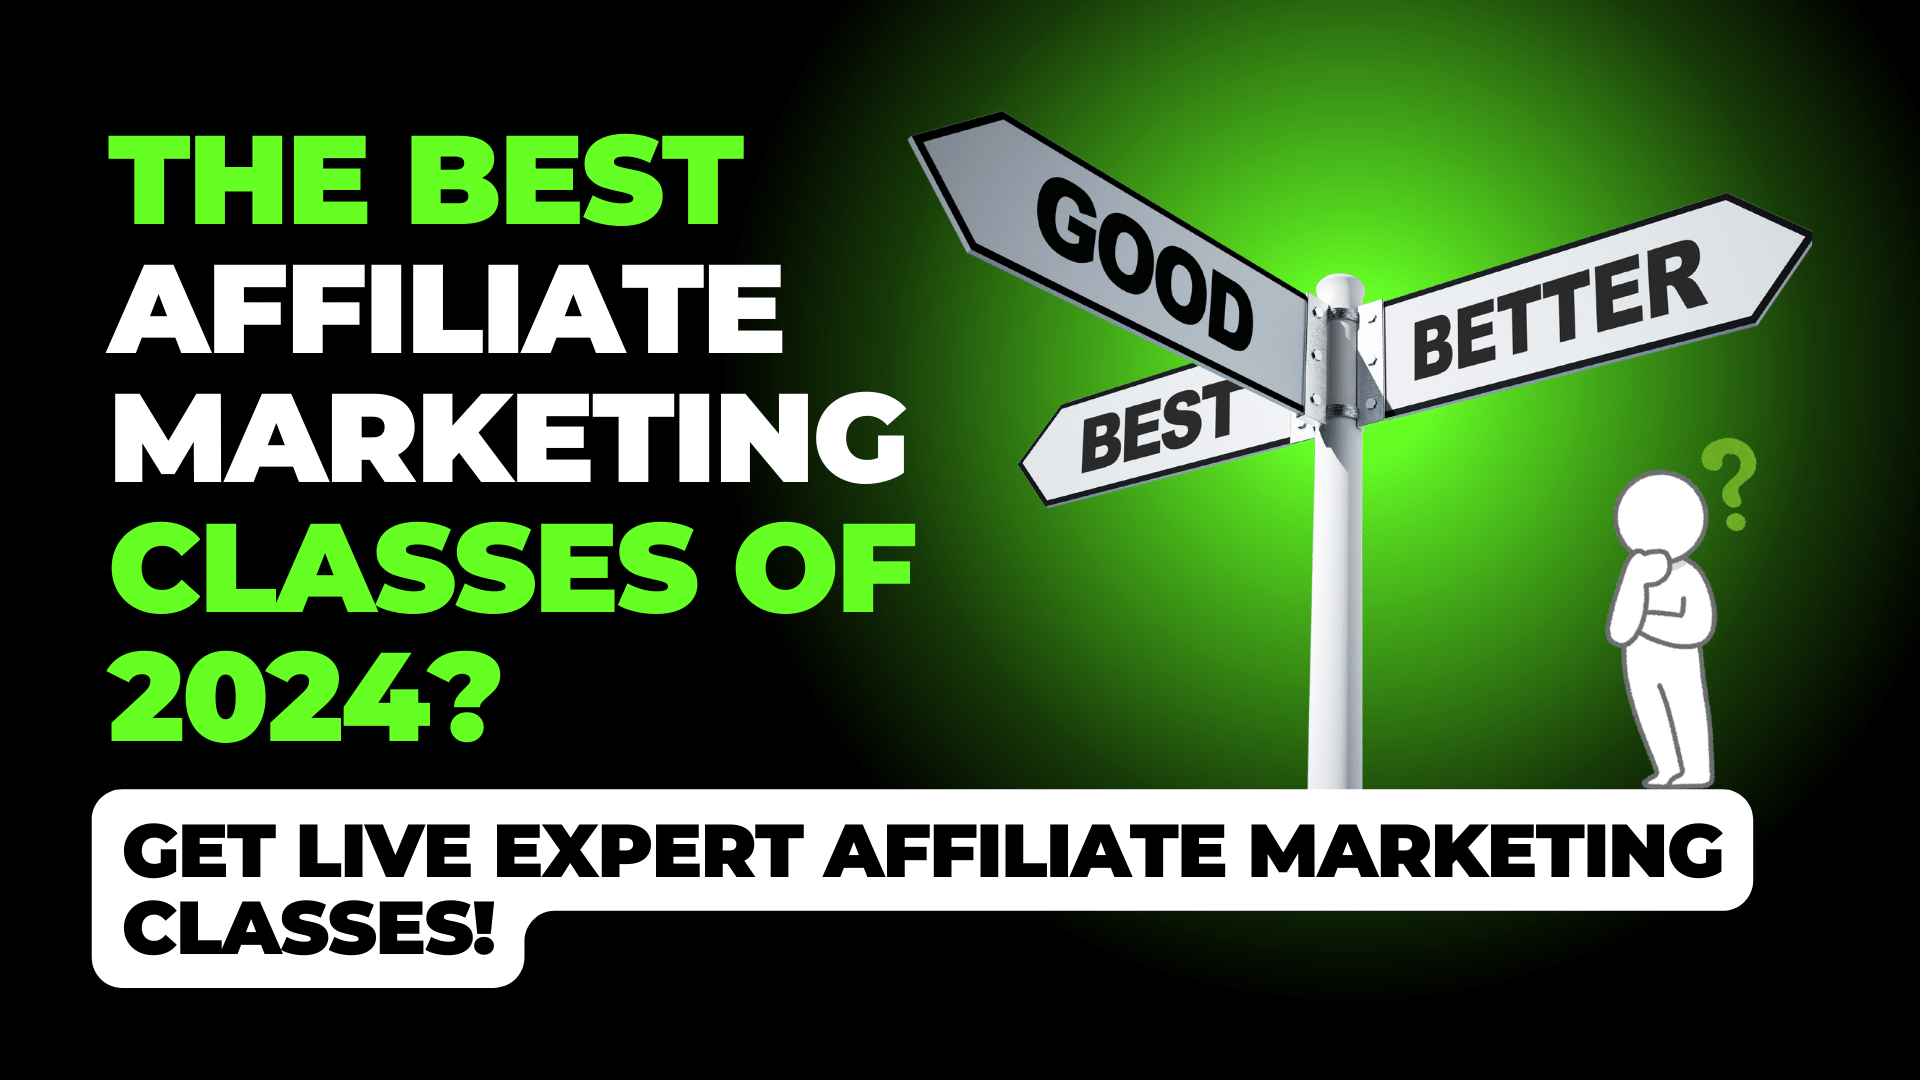 The best affiliate marketing classes